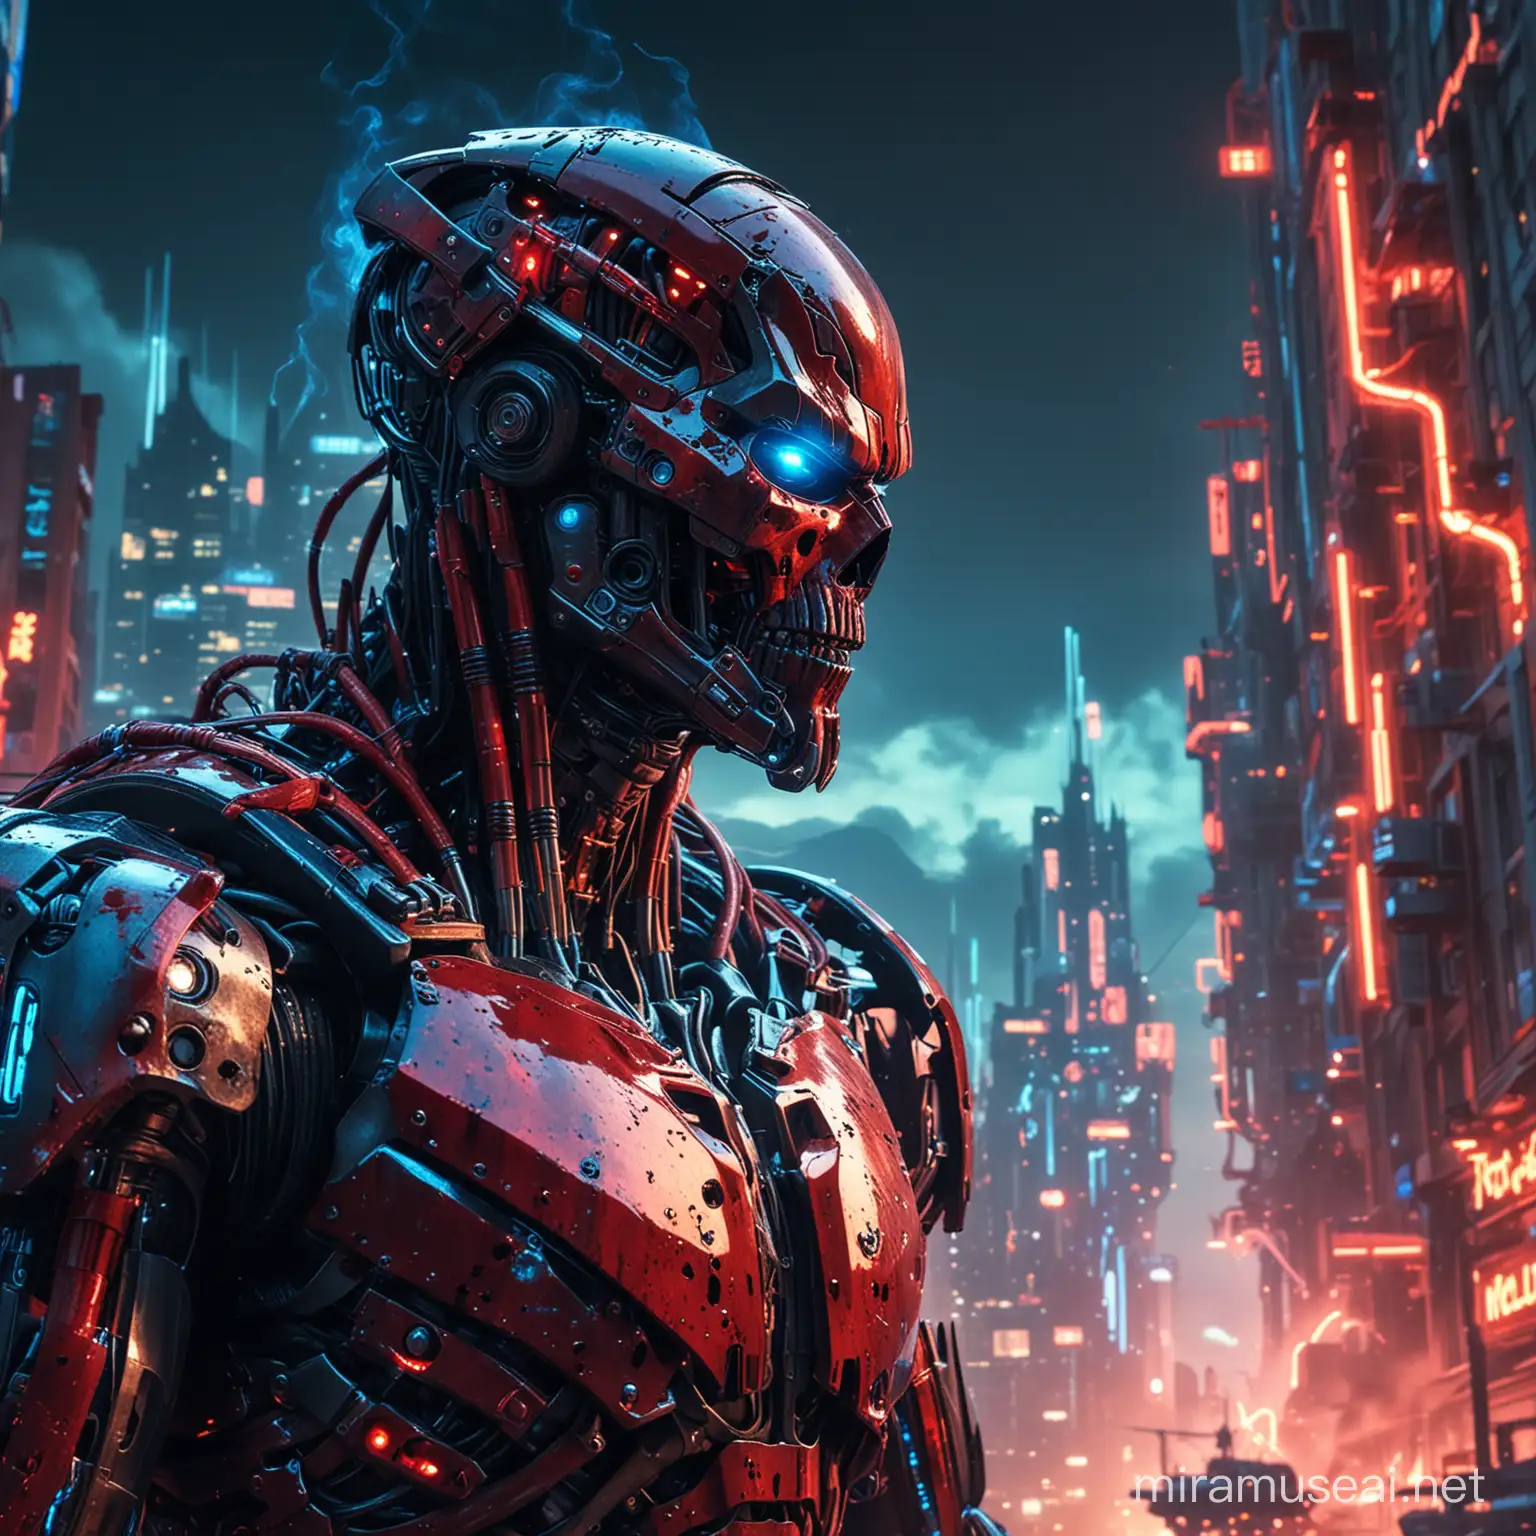 Evil Terminator in NeonLit Alien City